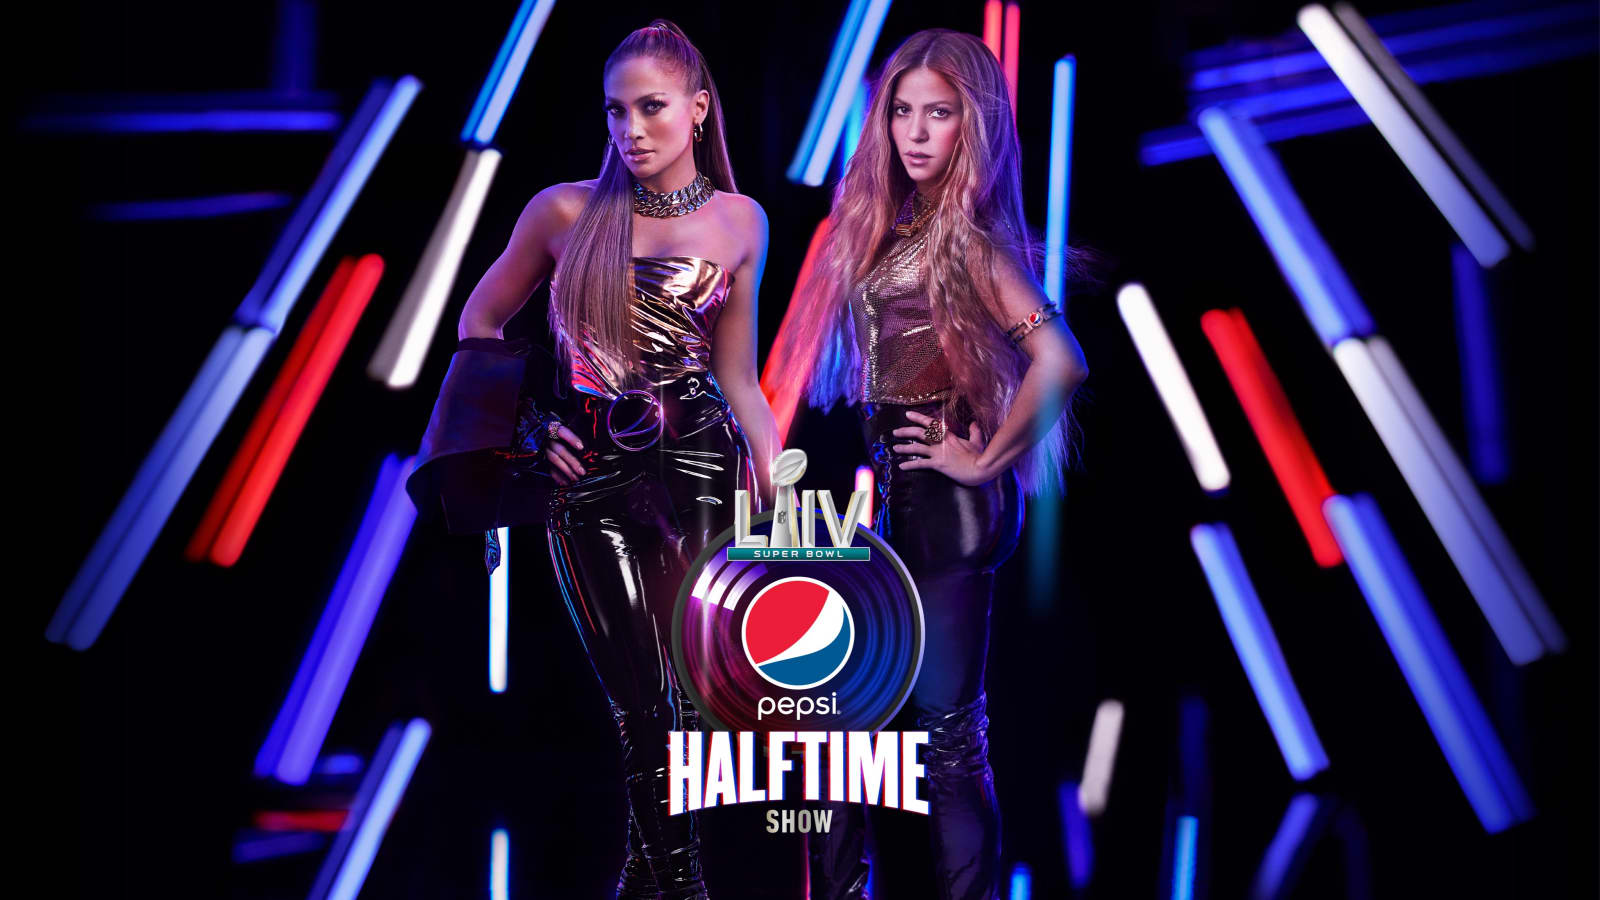 Jennifer Lopez, Shakira to headline Pepsi's Super Bowl Halftime Show